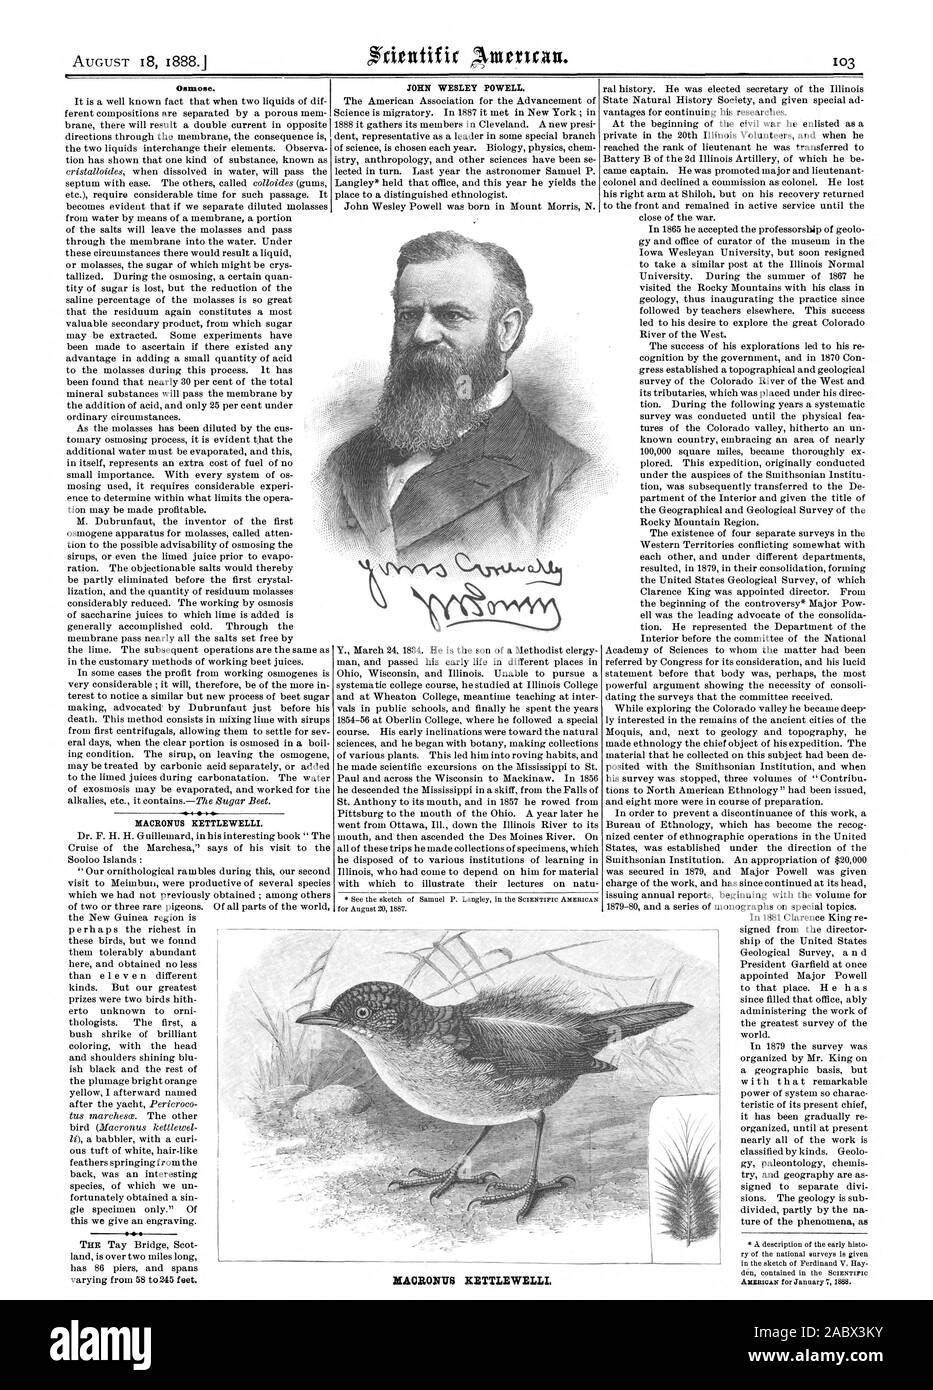 Osmose. MACRONUS WASSERKOCHER WELLI. JOHN Wesley Powell. DUMONT'S KETTLEWELLI, Scientific American, 1888-08-18 Stockfoto